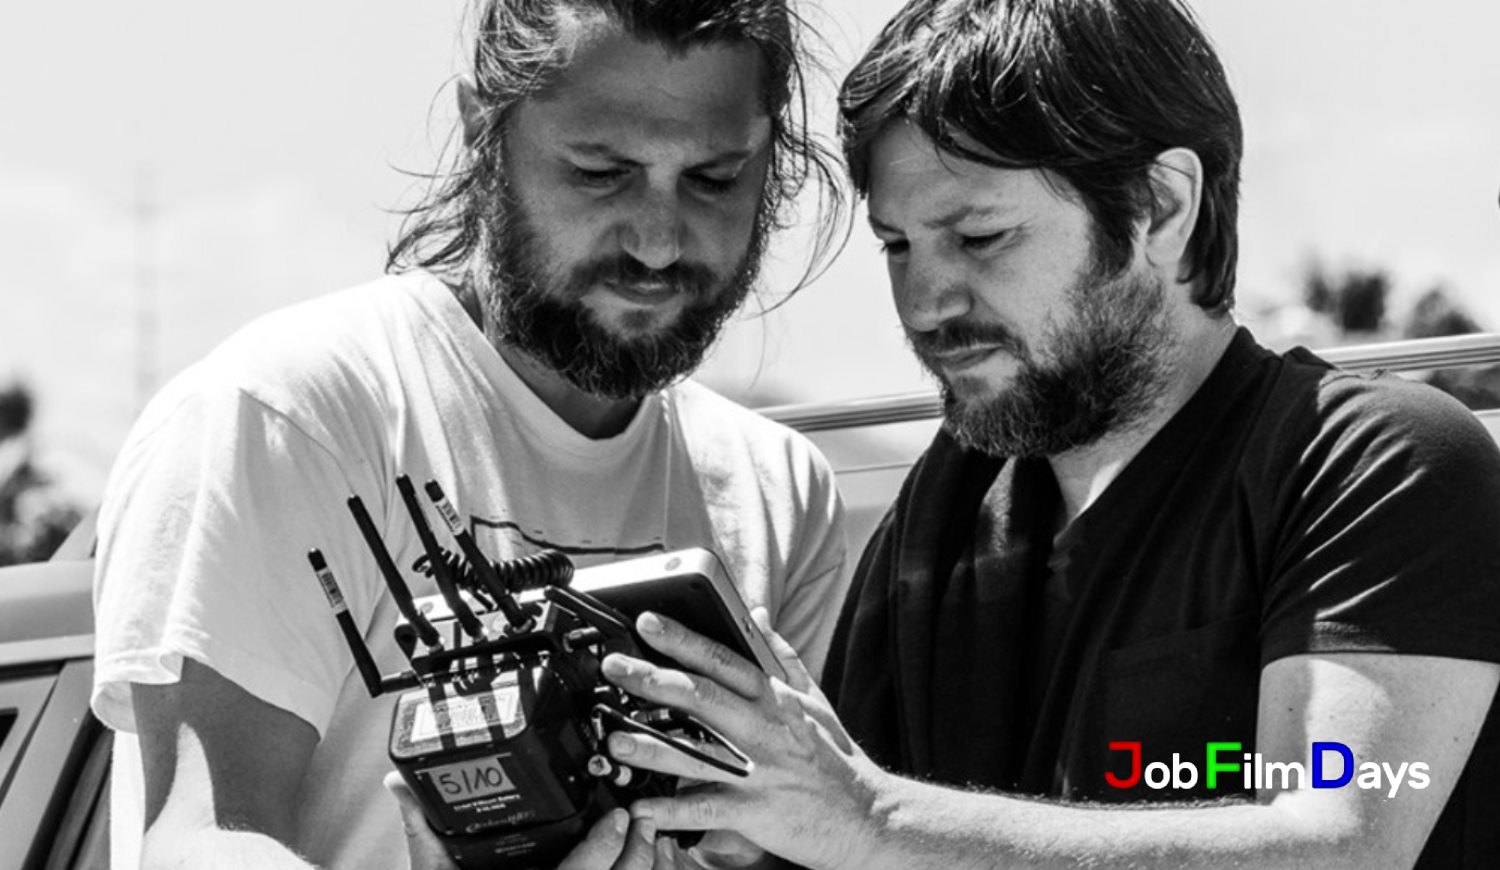 Job Film Days – Masterclass con Gianluca e Massimiliano De Serio